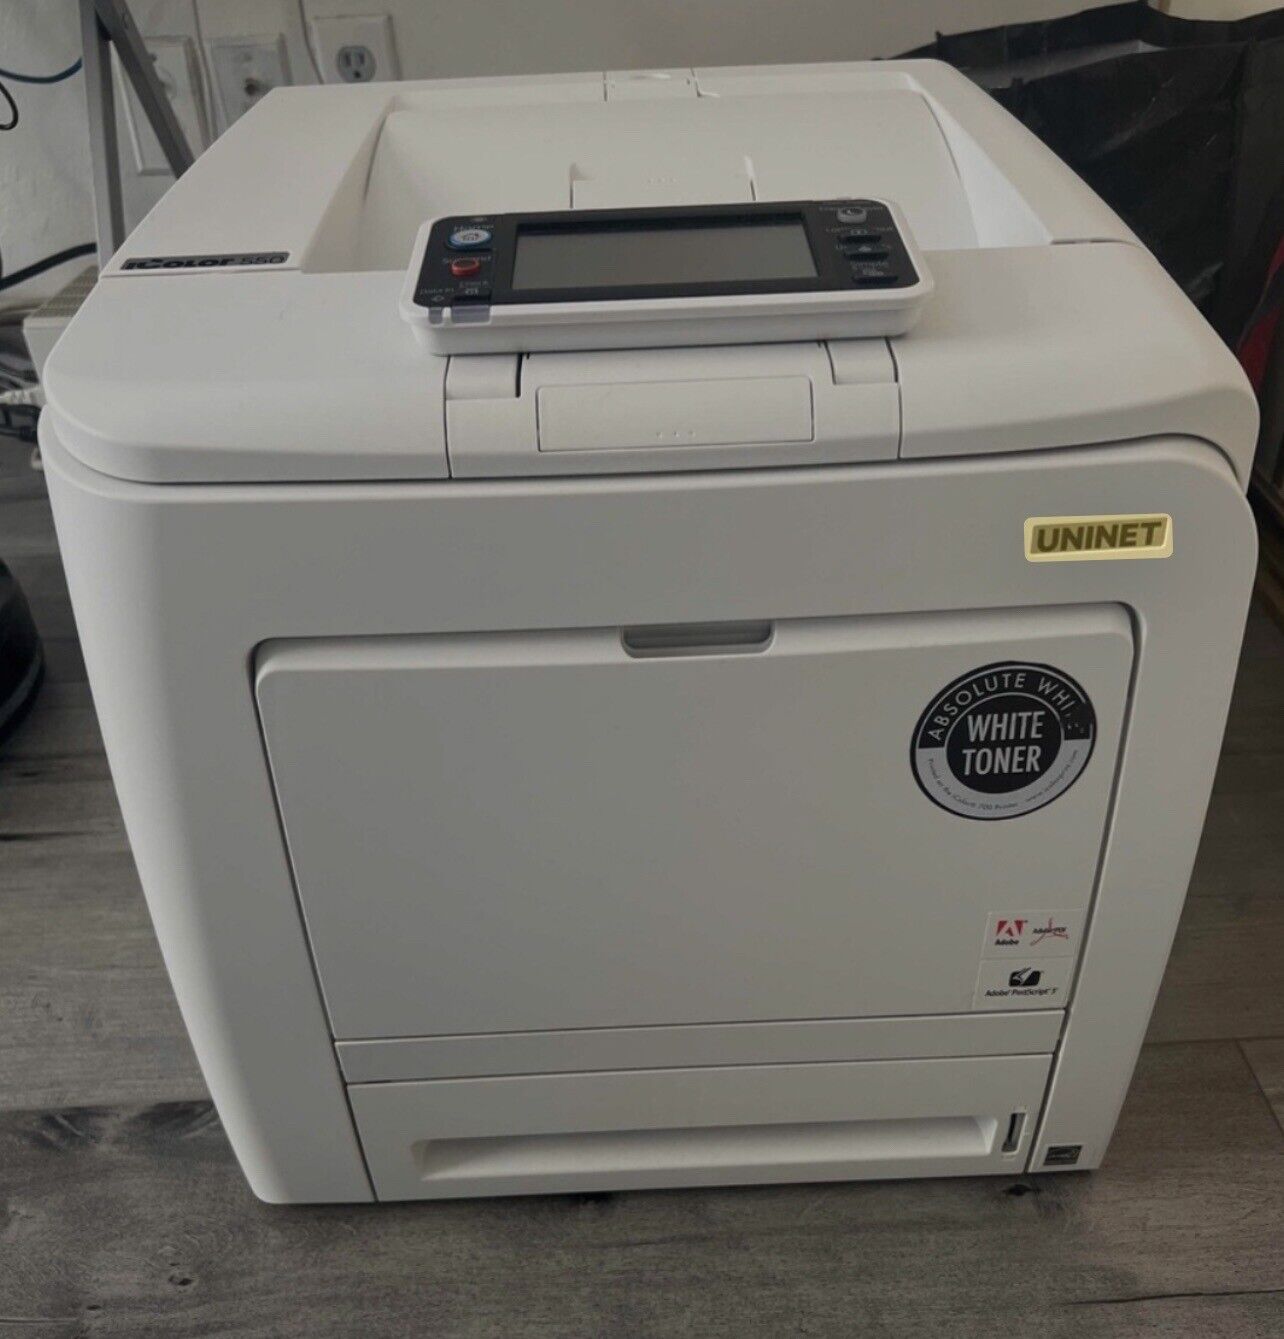 UNINET iColor 550 White Toner Printer